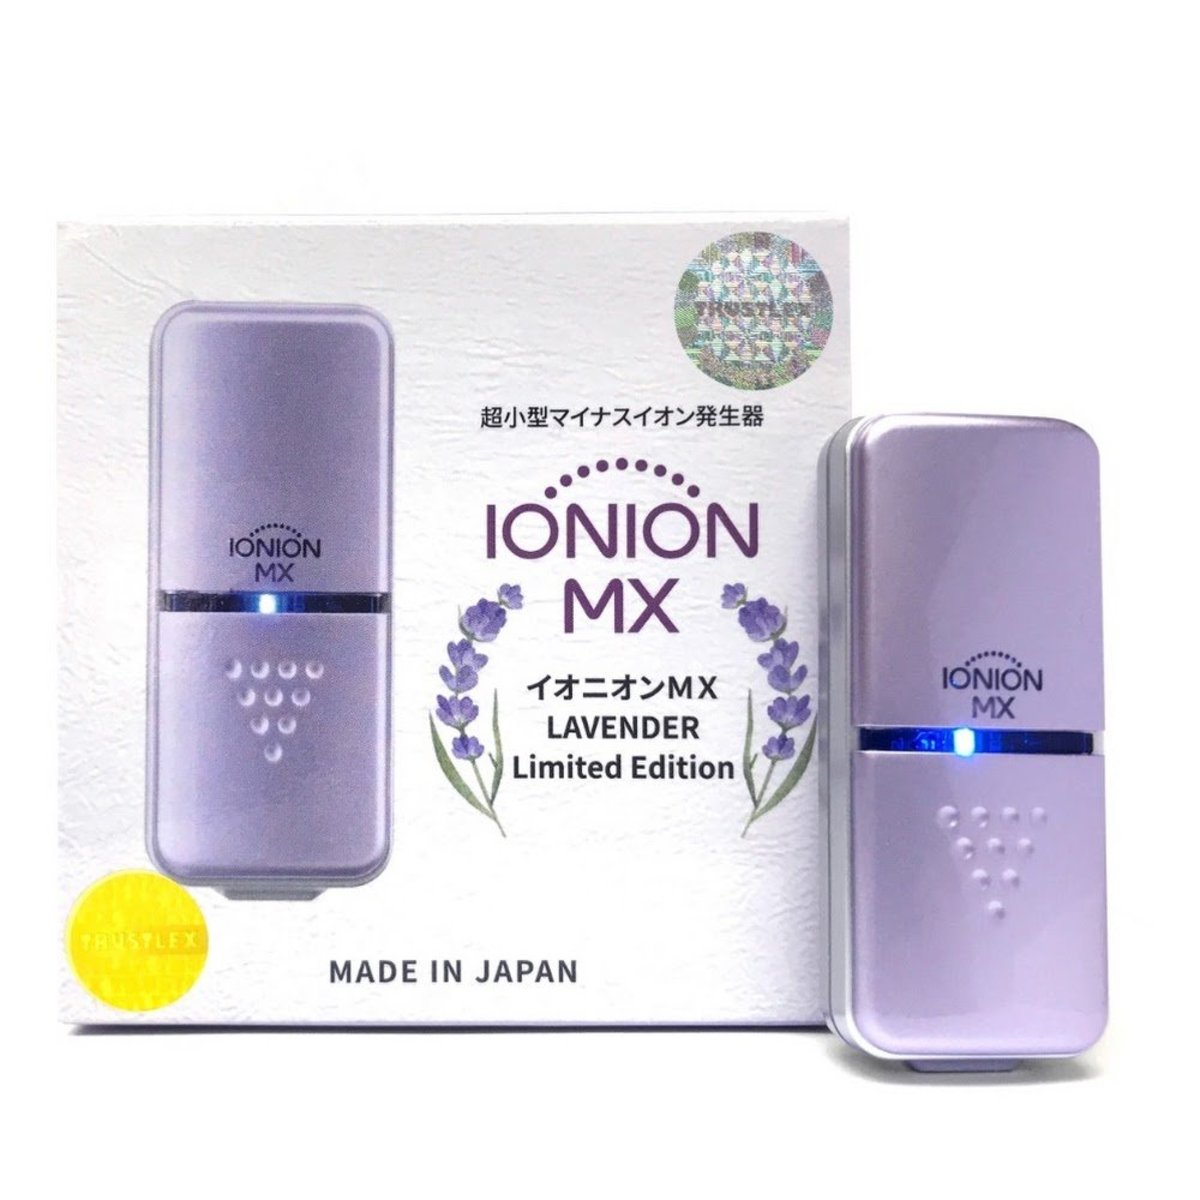 MX 超輕量隨身空氣清淨機 - 紫色【香港行貨】